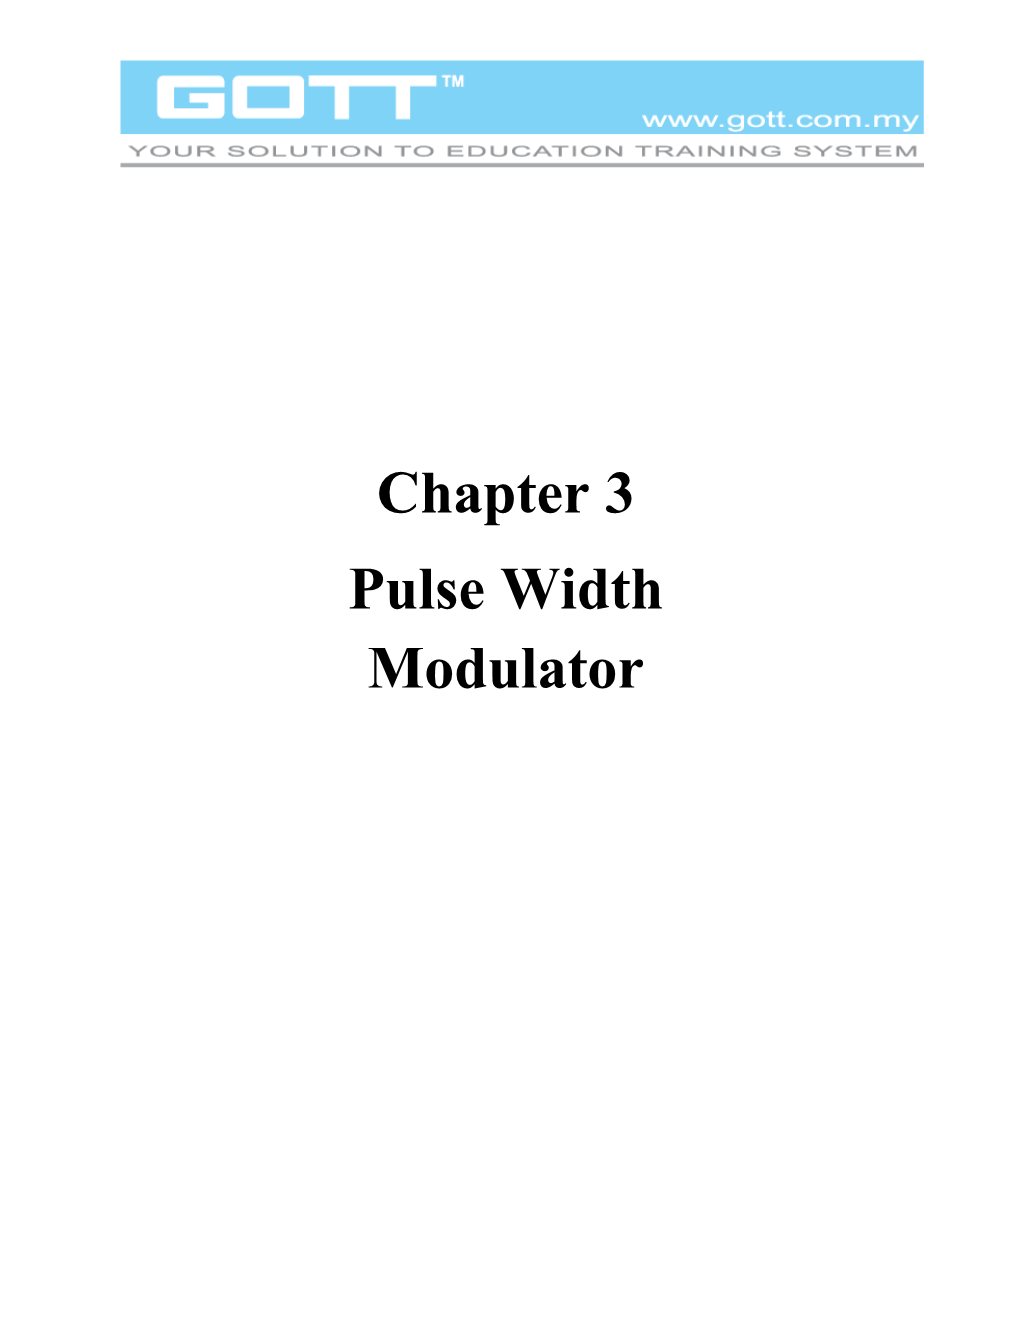 Chapter 3 Pulse Width Modulator